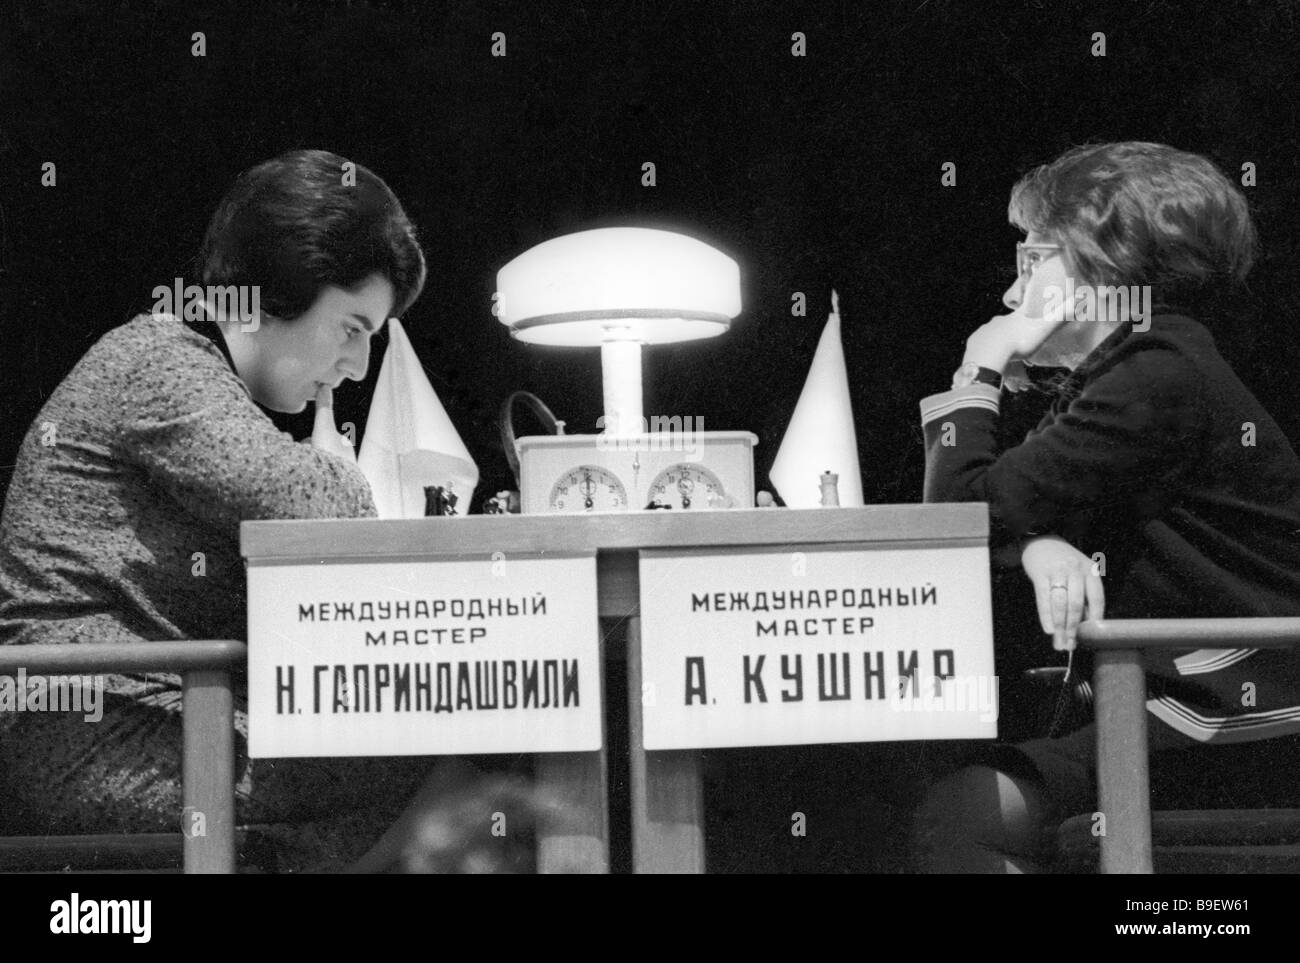 World chess champion Nona Gaprindashvili left and three time aspiring champion Alla Kushnir right playing chess Stock Photo photo pic